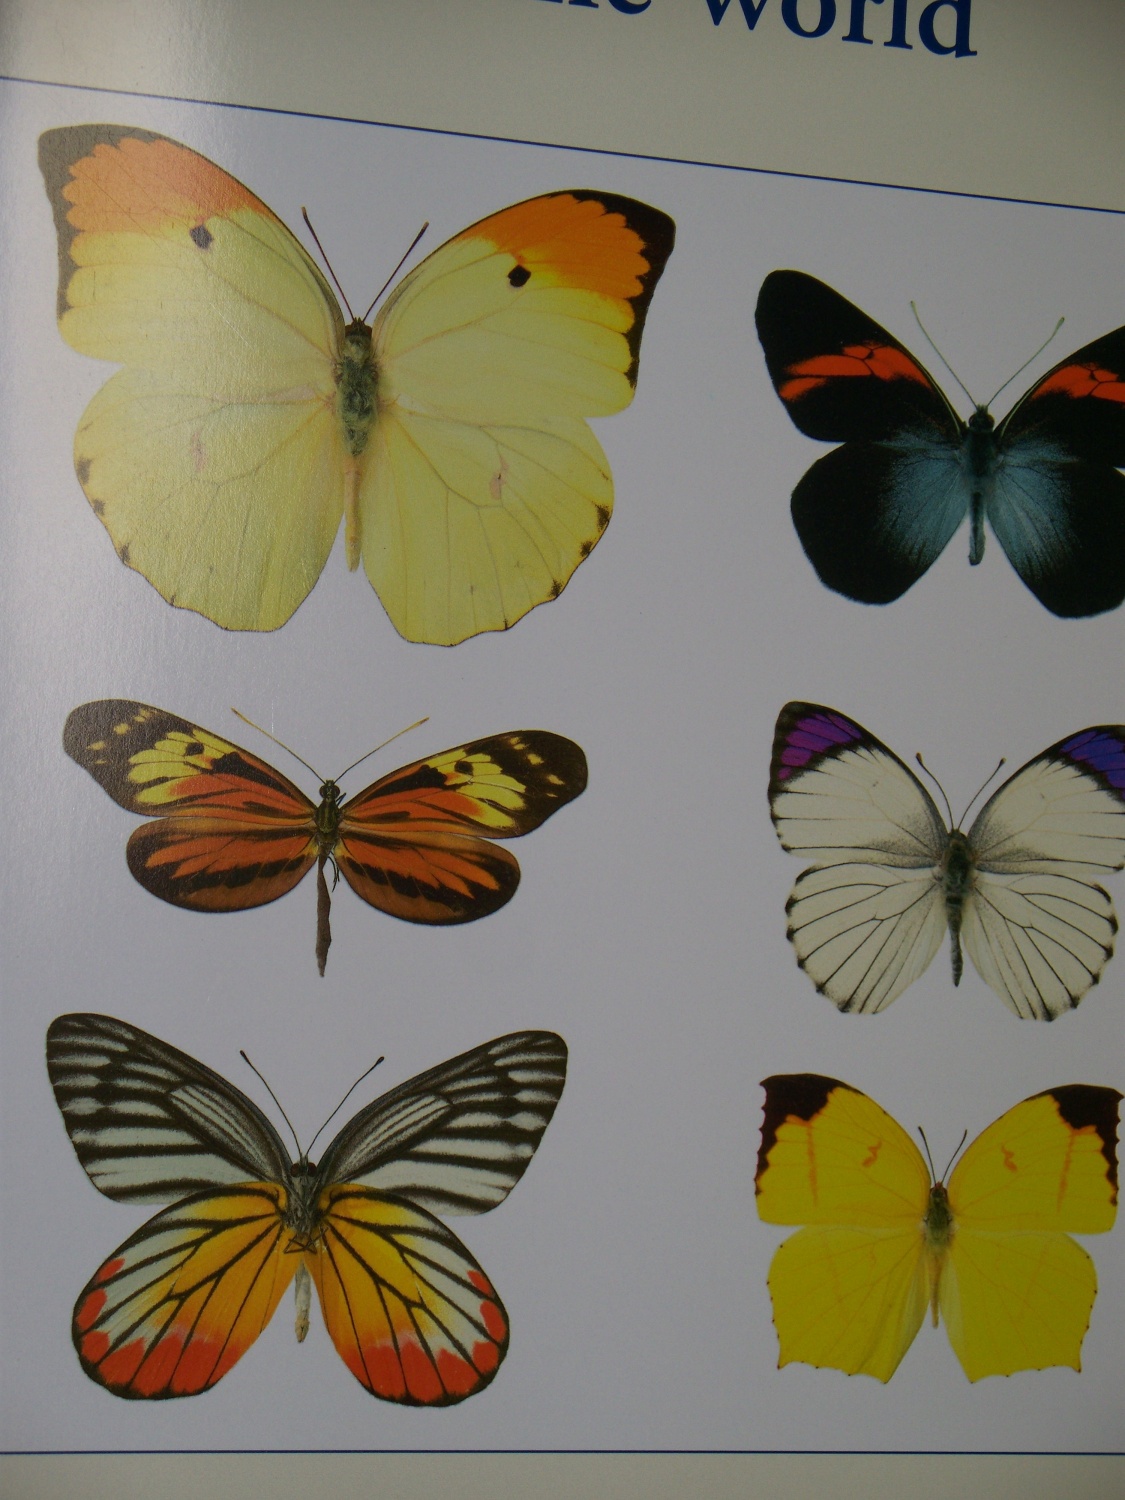 Butterflies of the world (Pieridae I- photos)